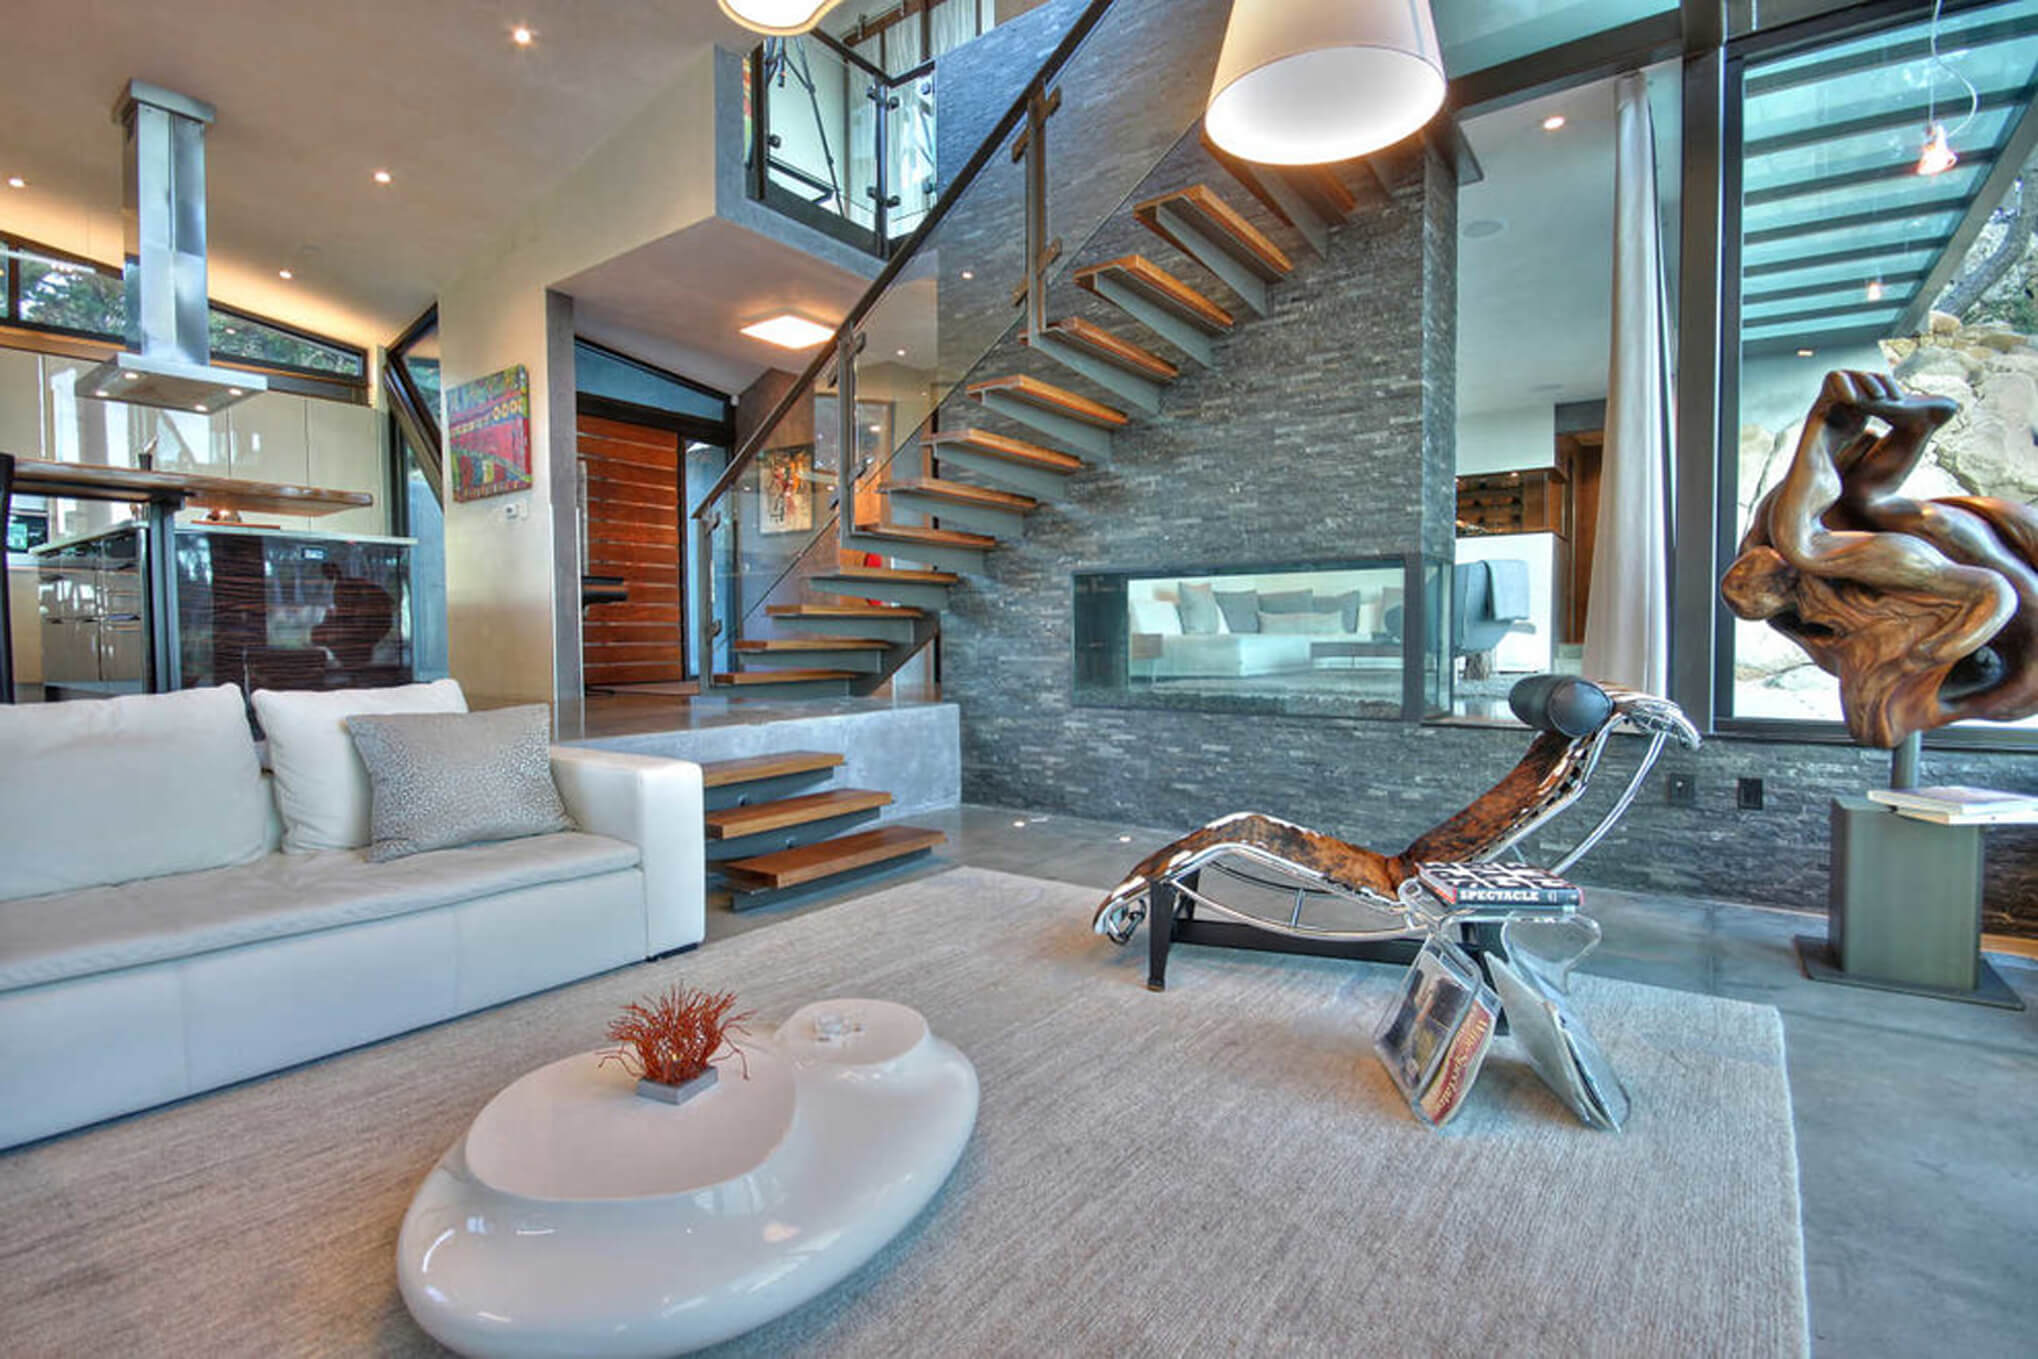 California modern living room designed by Cincinnati's premiere interior designer, RM Interiors.